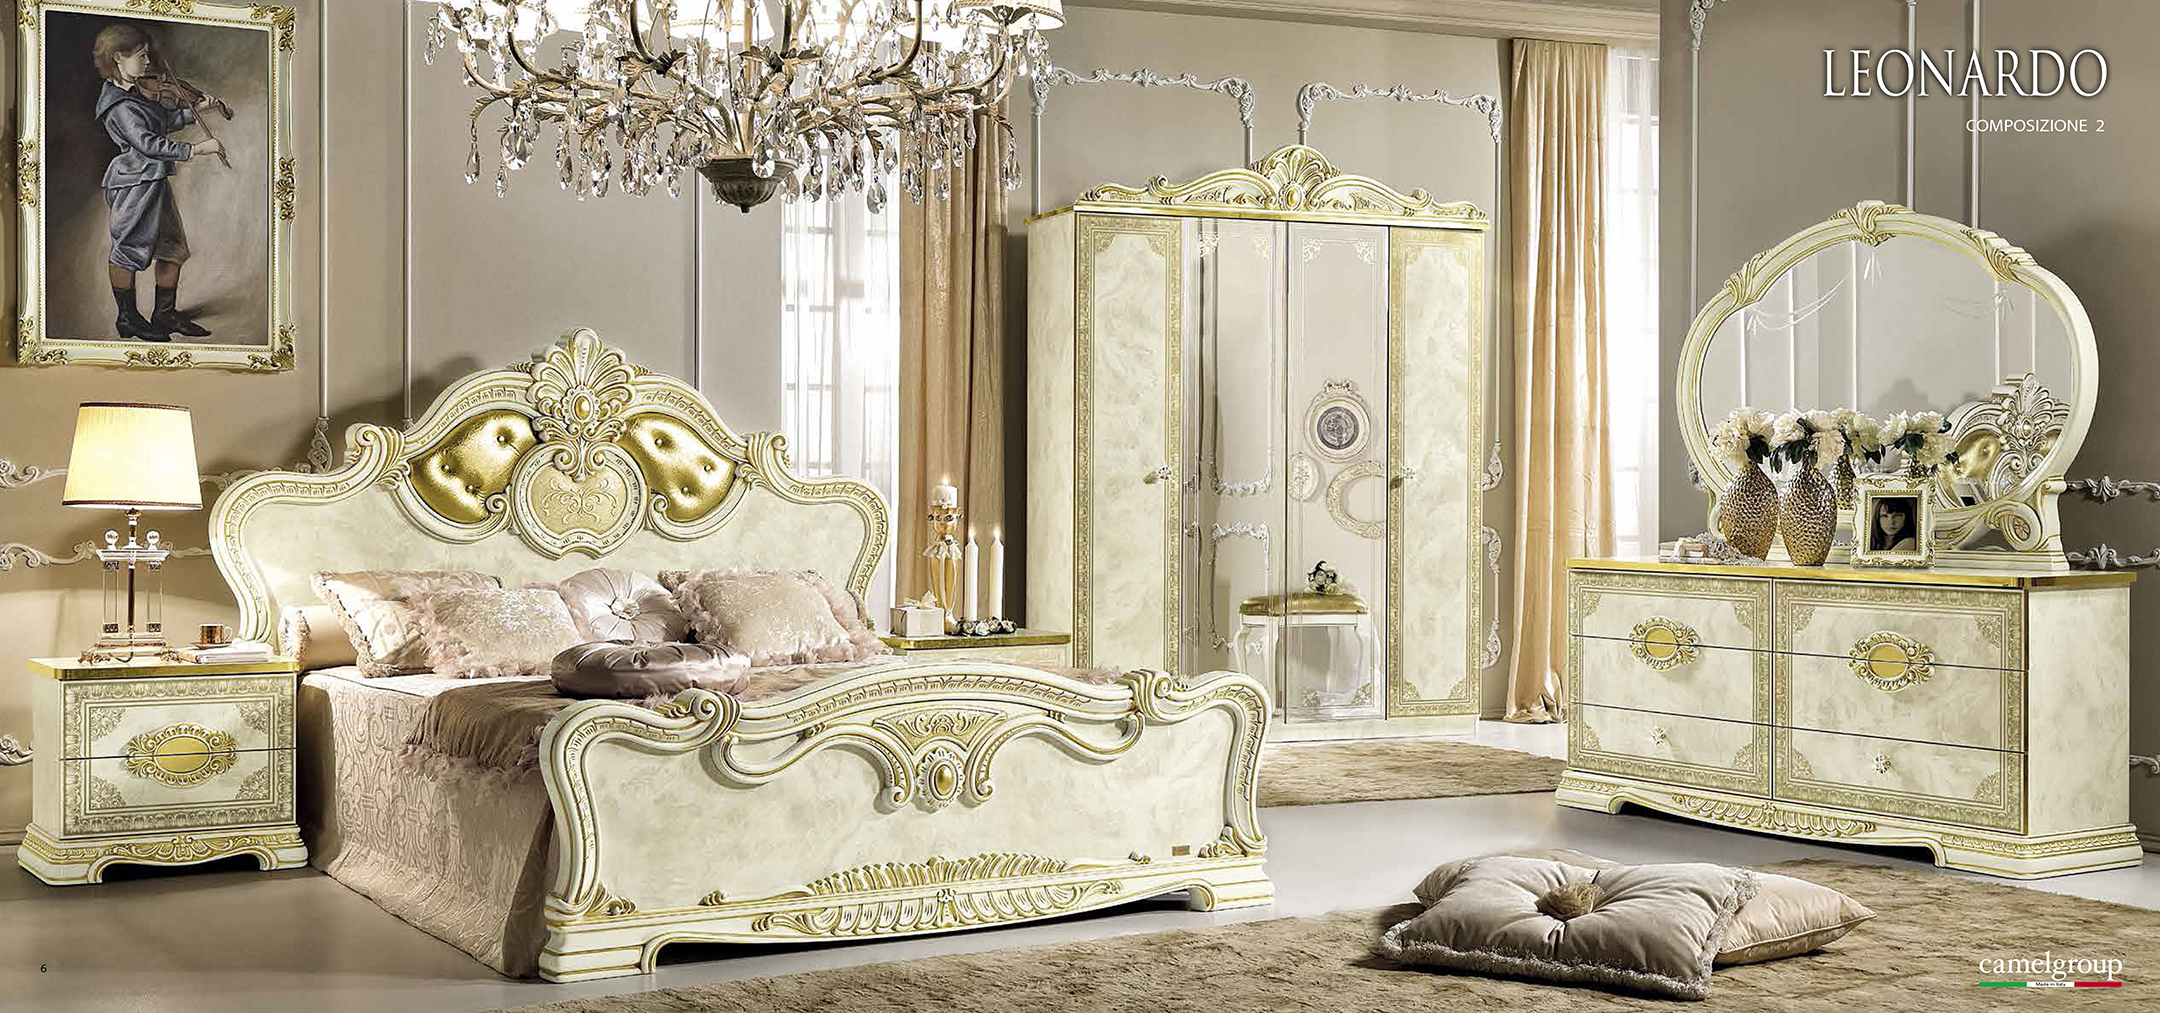 Bedroom Furniture Beds Leonardo Bedroom Additional Items